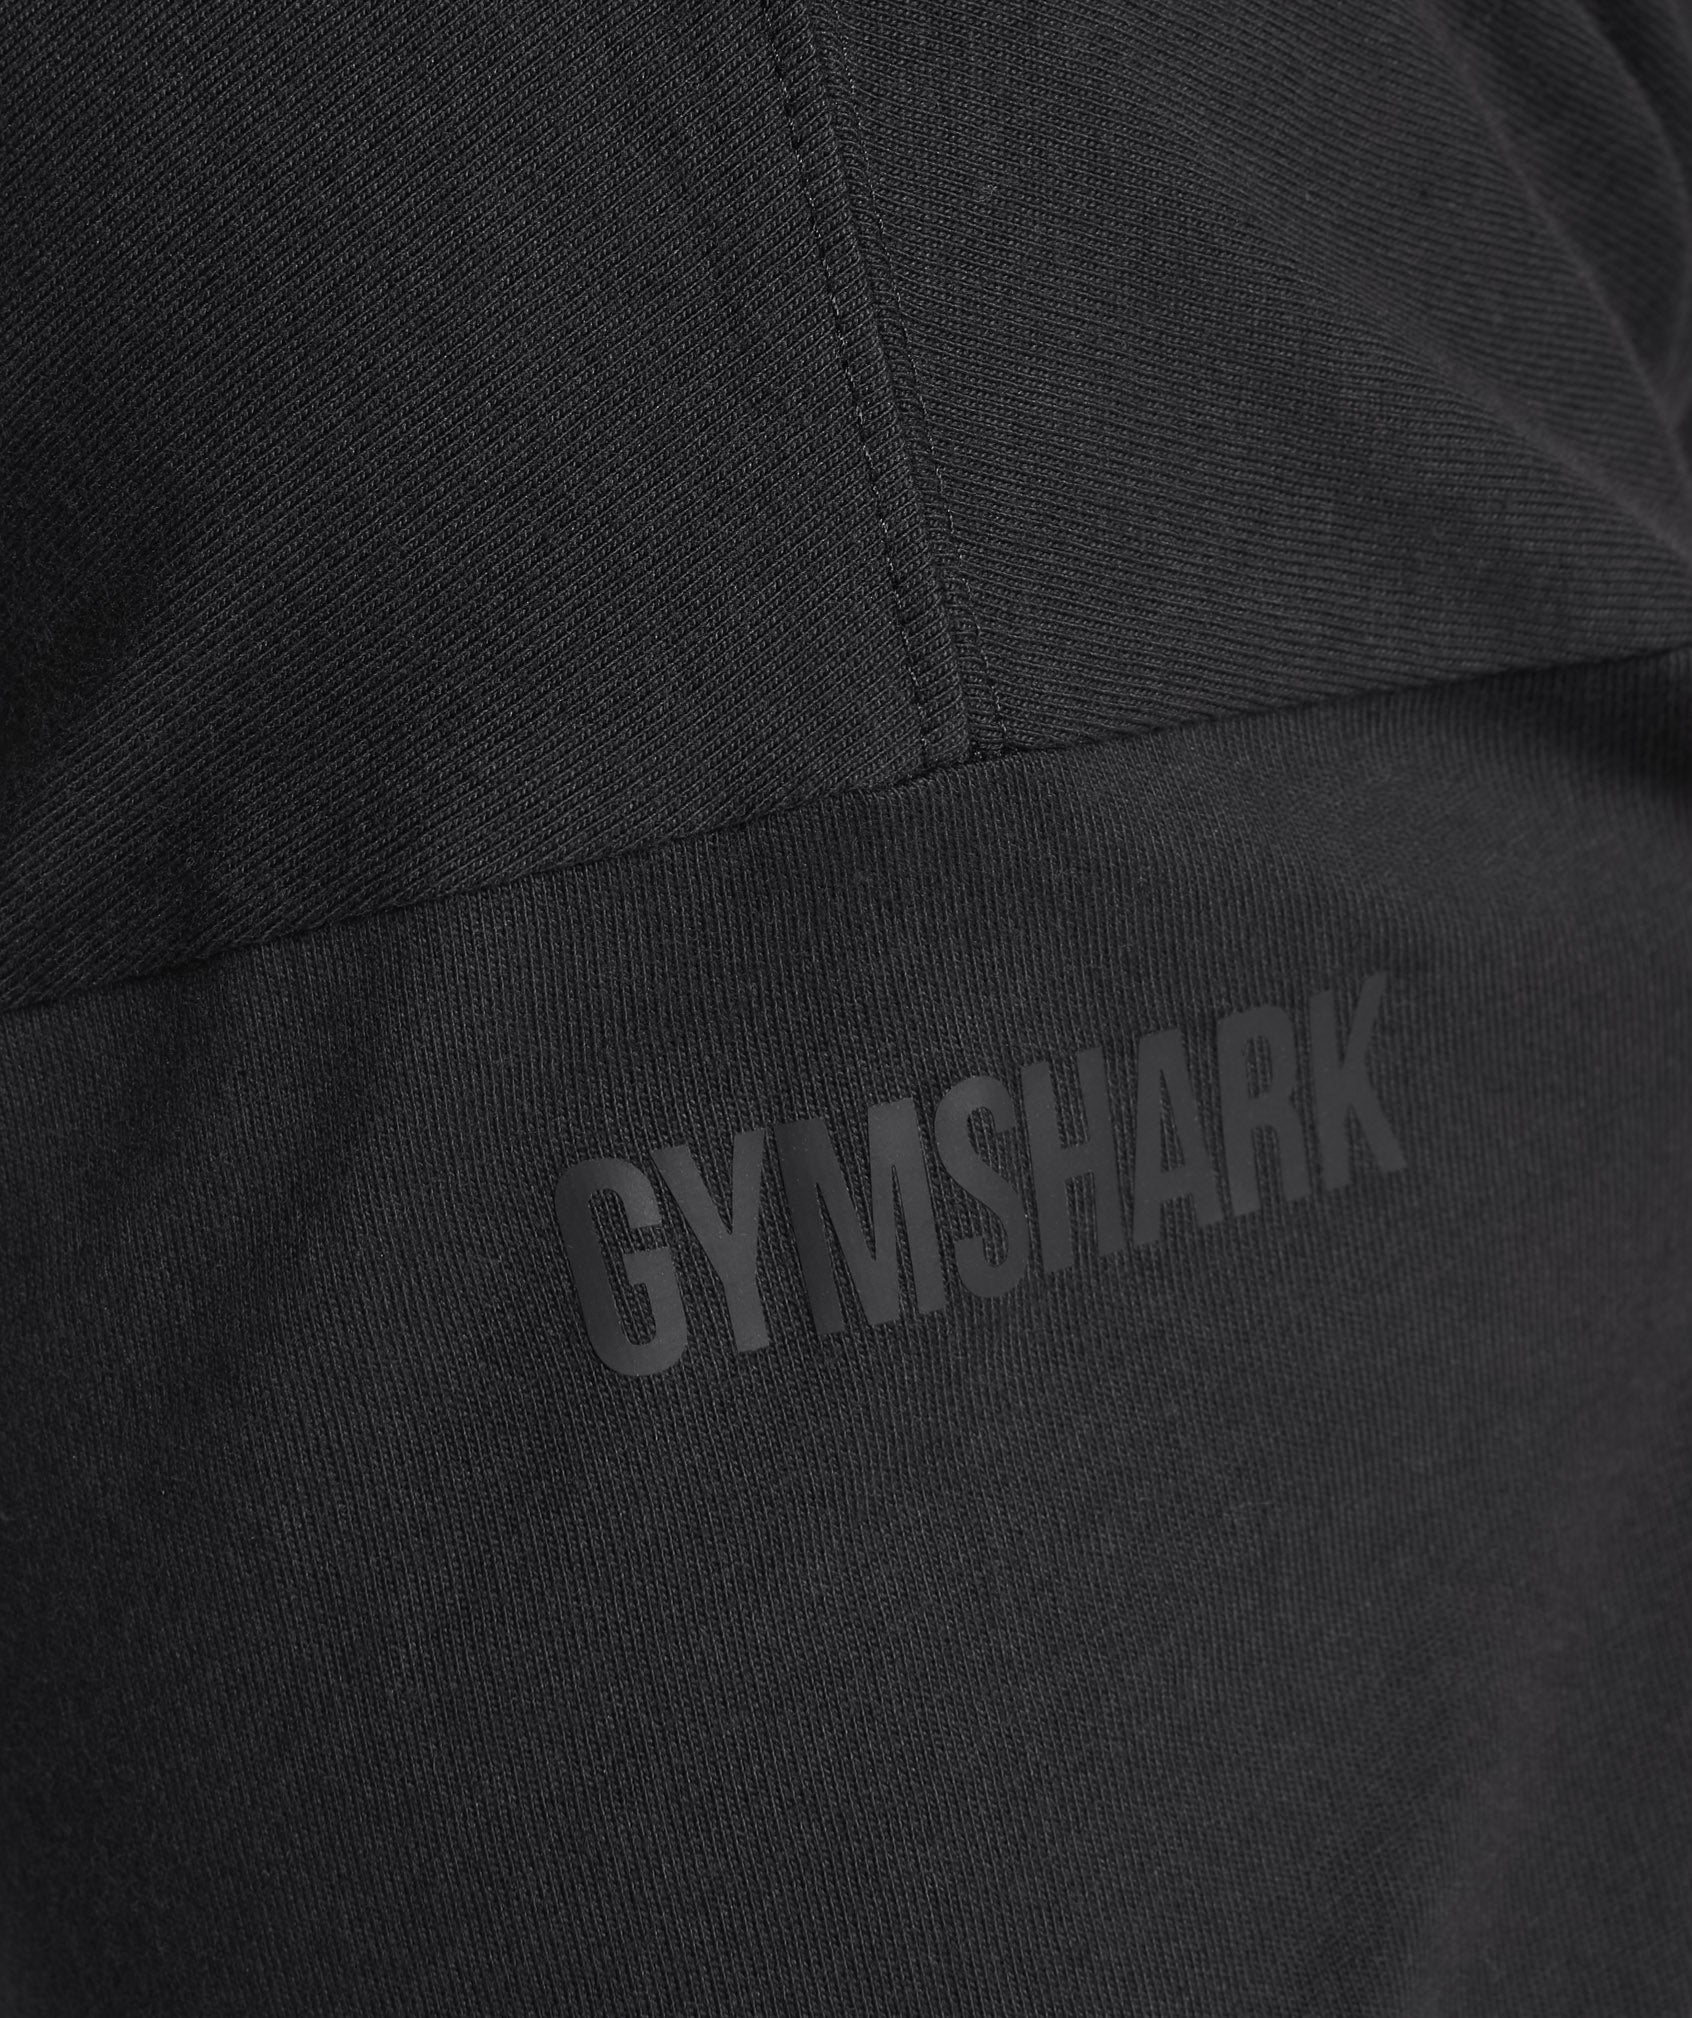 Gymshark Athlete, David Laid sporting the Gymshark Eaze T-Shirt in Black.